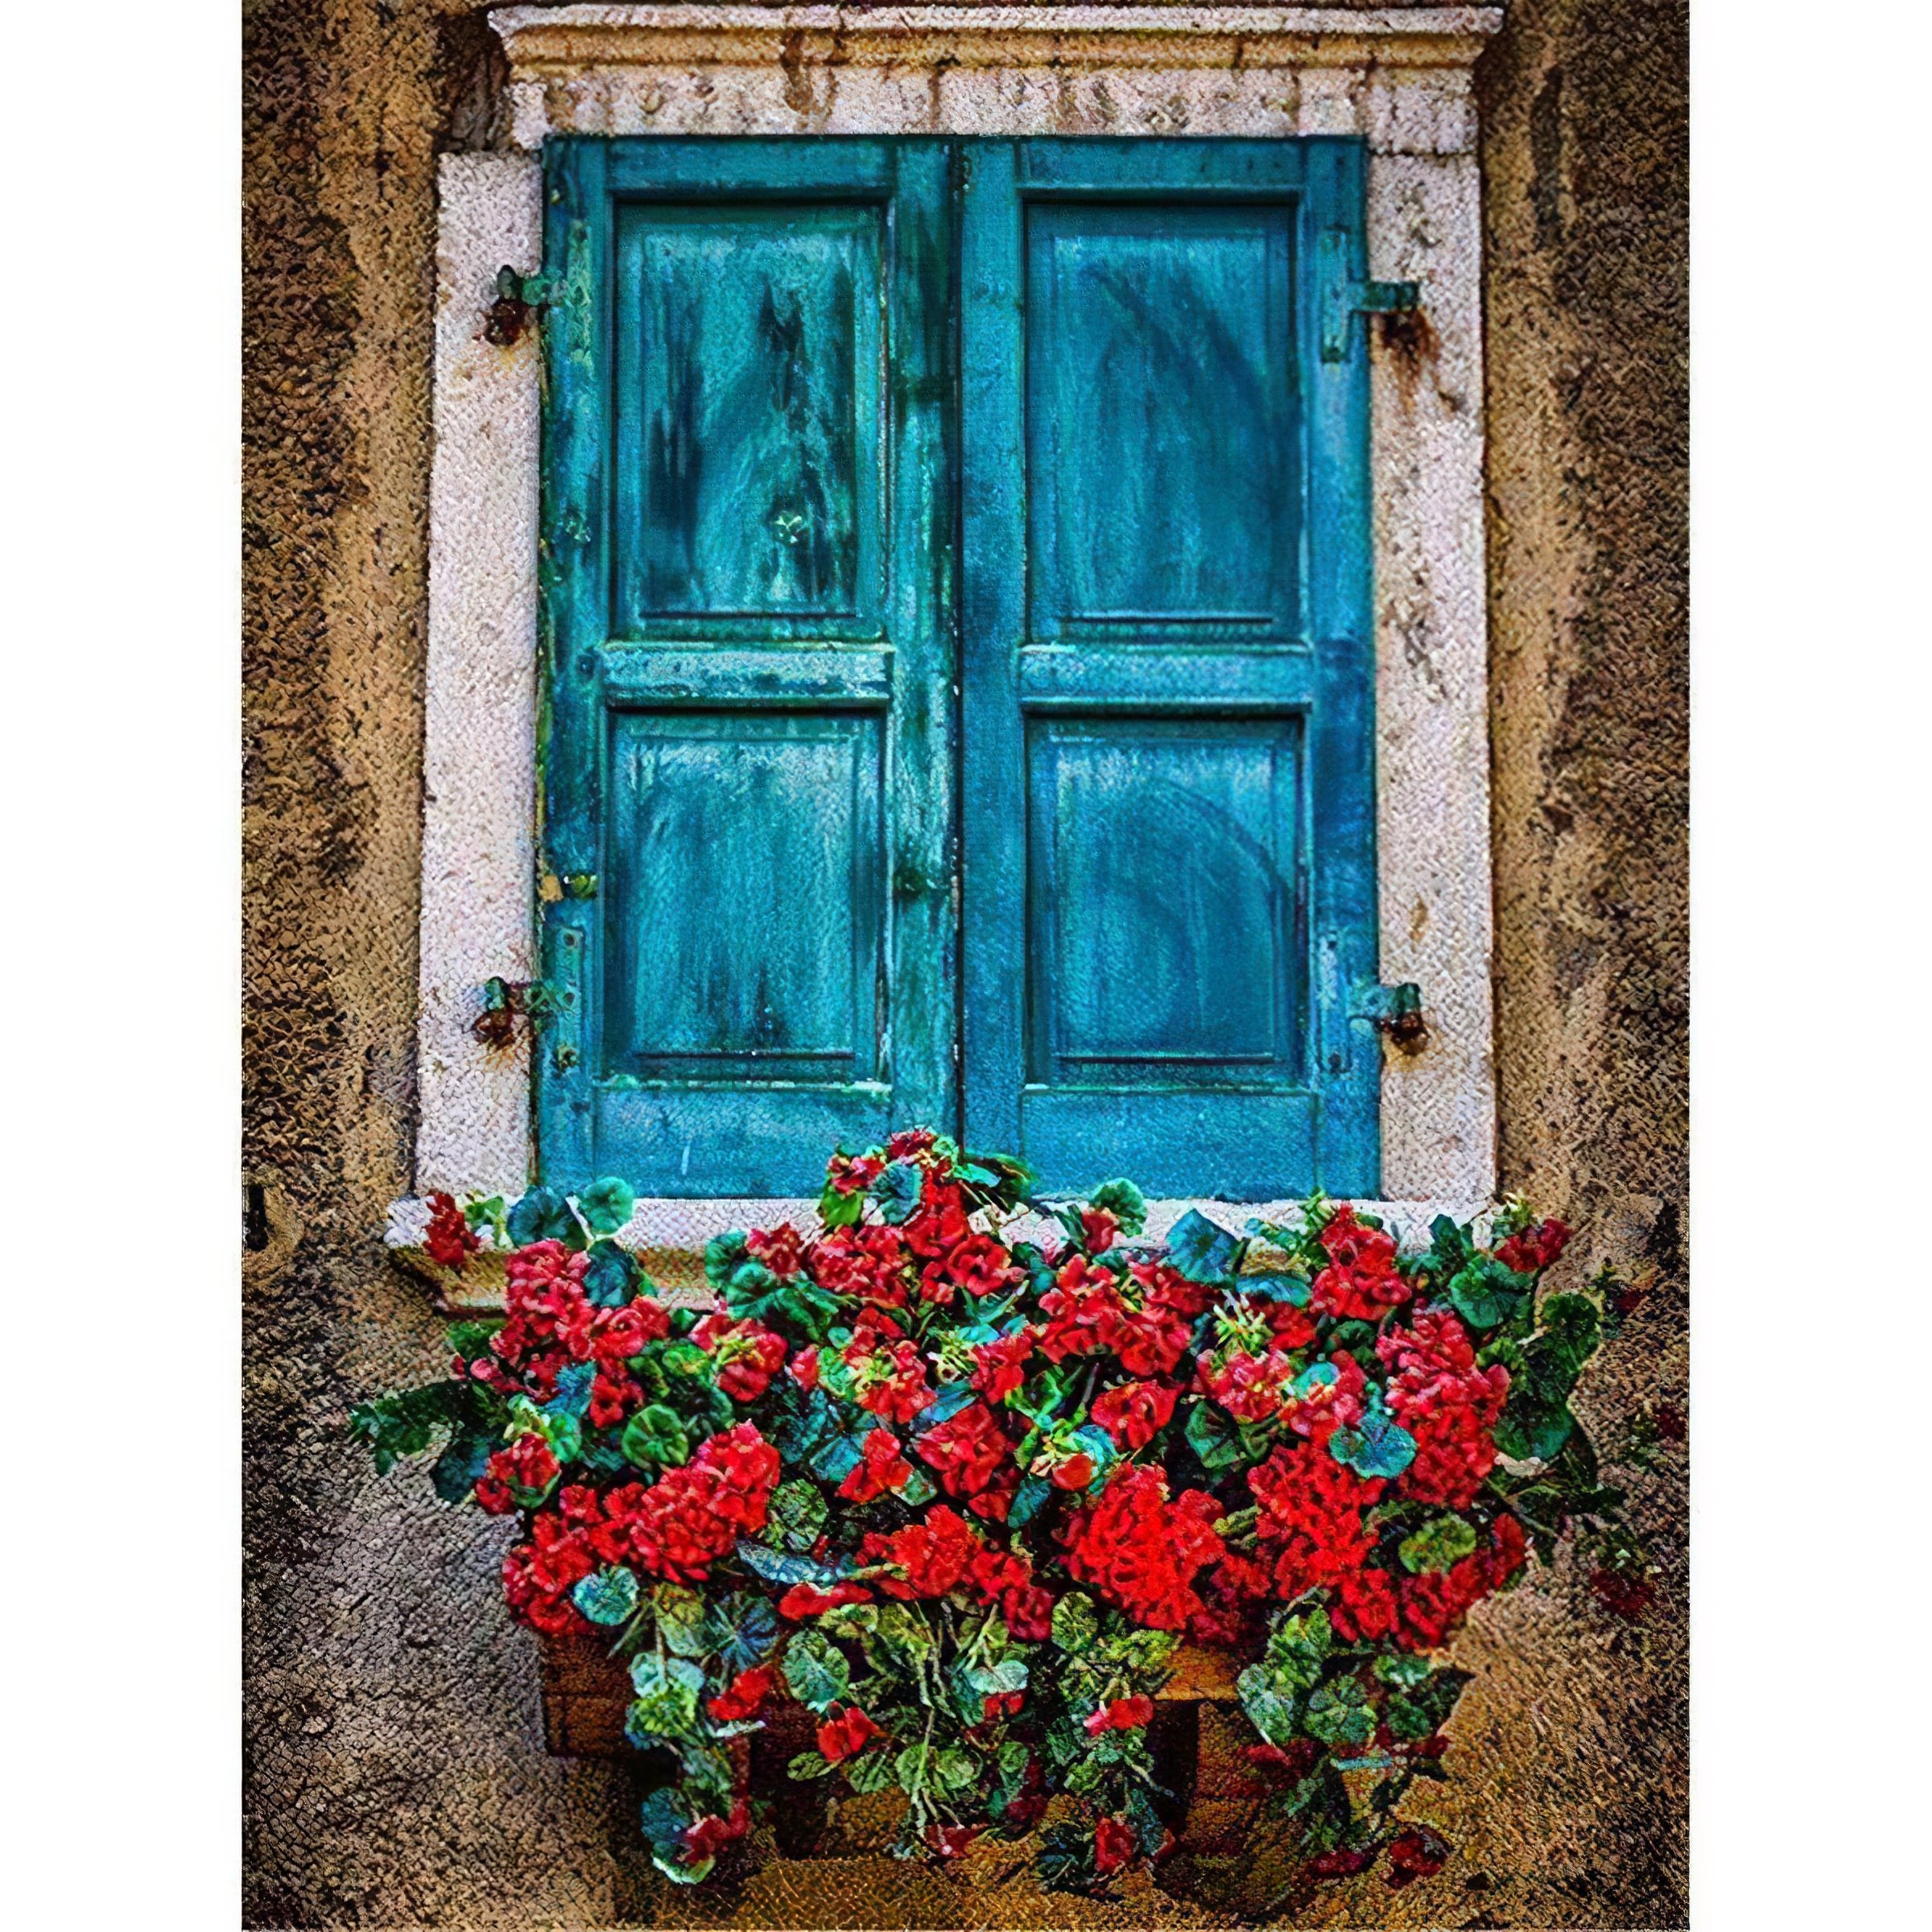 Enjoy the serene beauty, a peaceful floral arrangement.Red Flowers By The Window - Diamondartlove